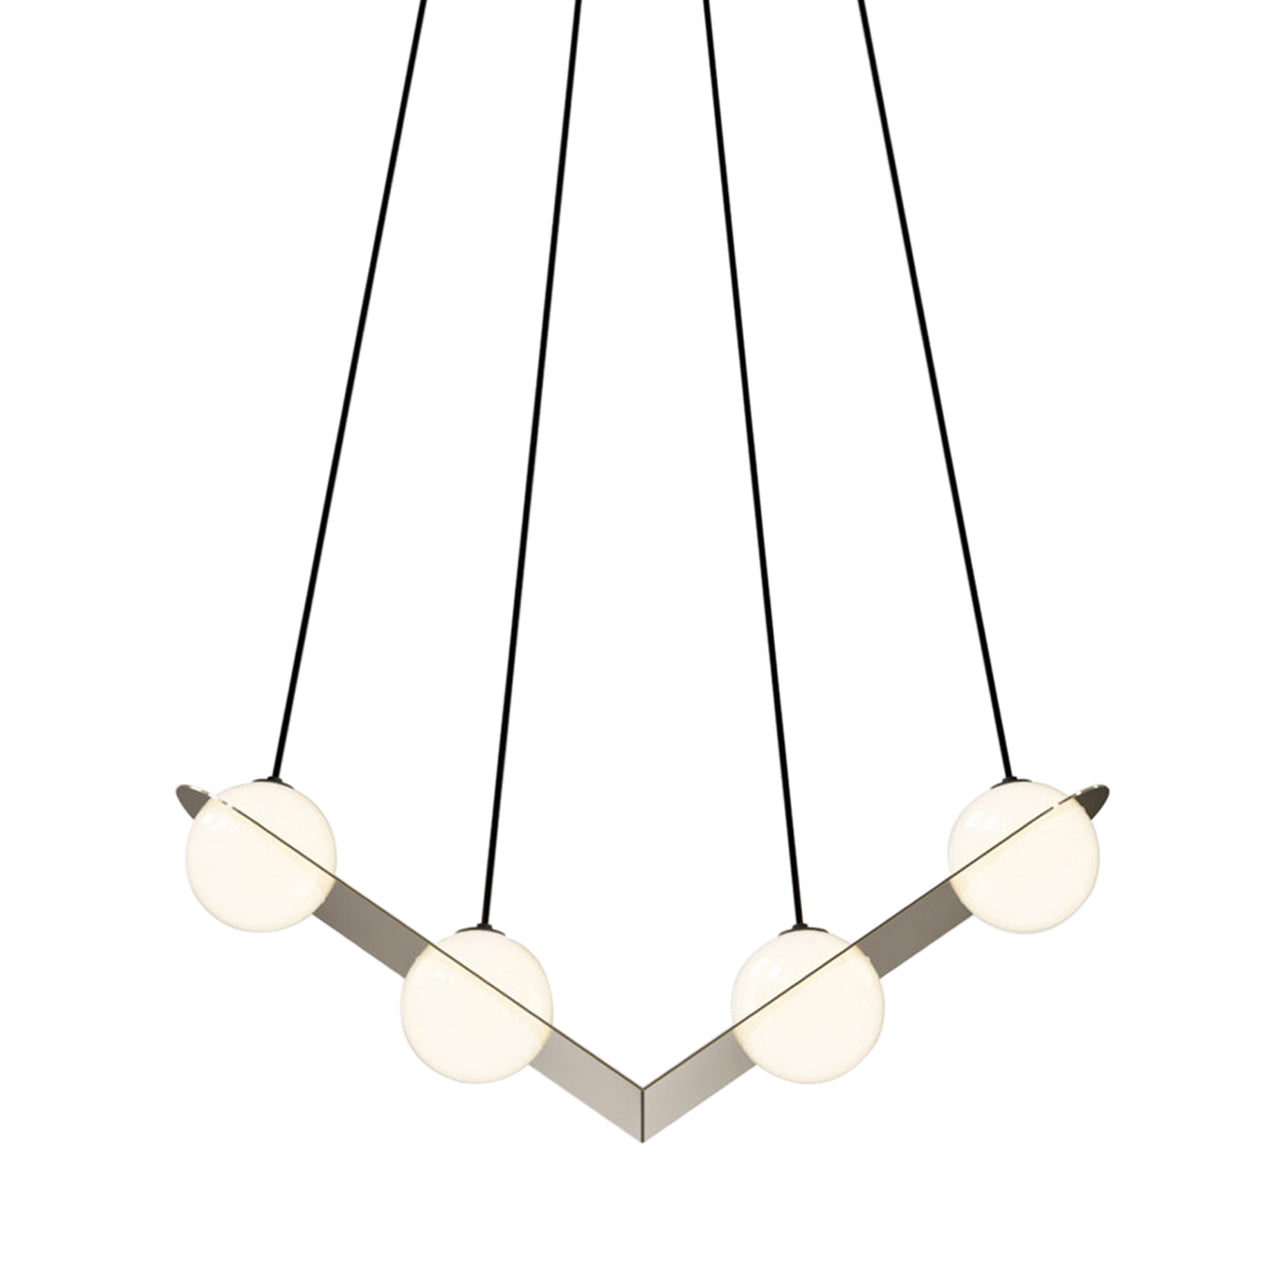 Laurent 02 Suspension Lamp: Brass + Black + Angled Wires